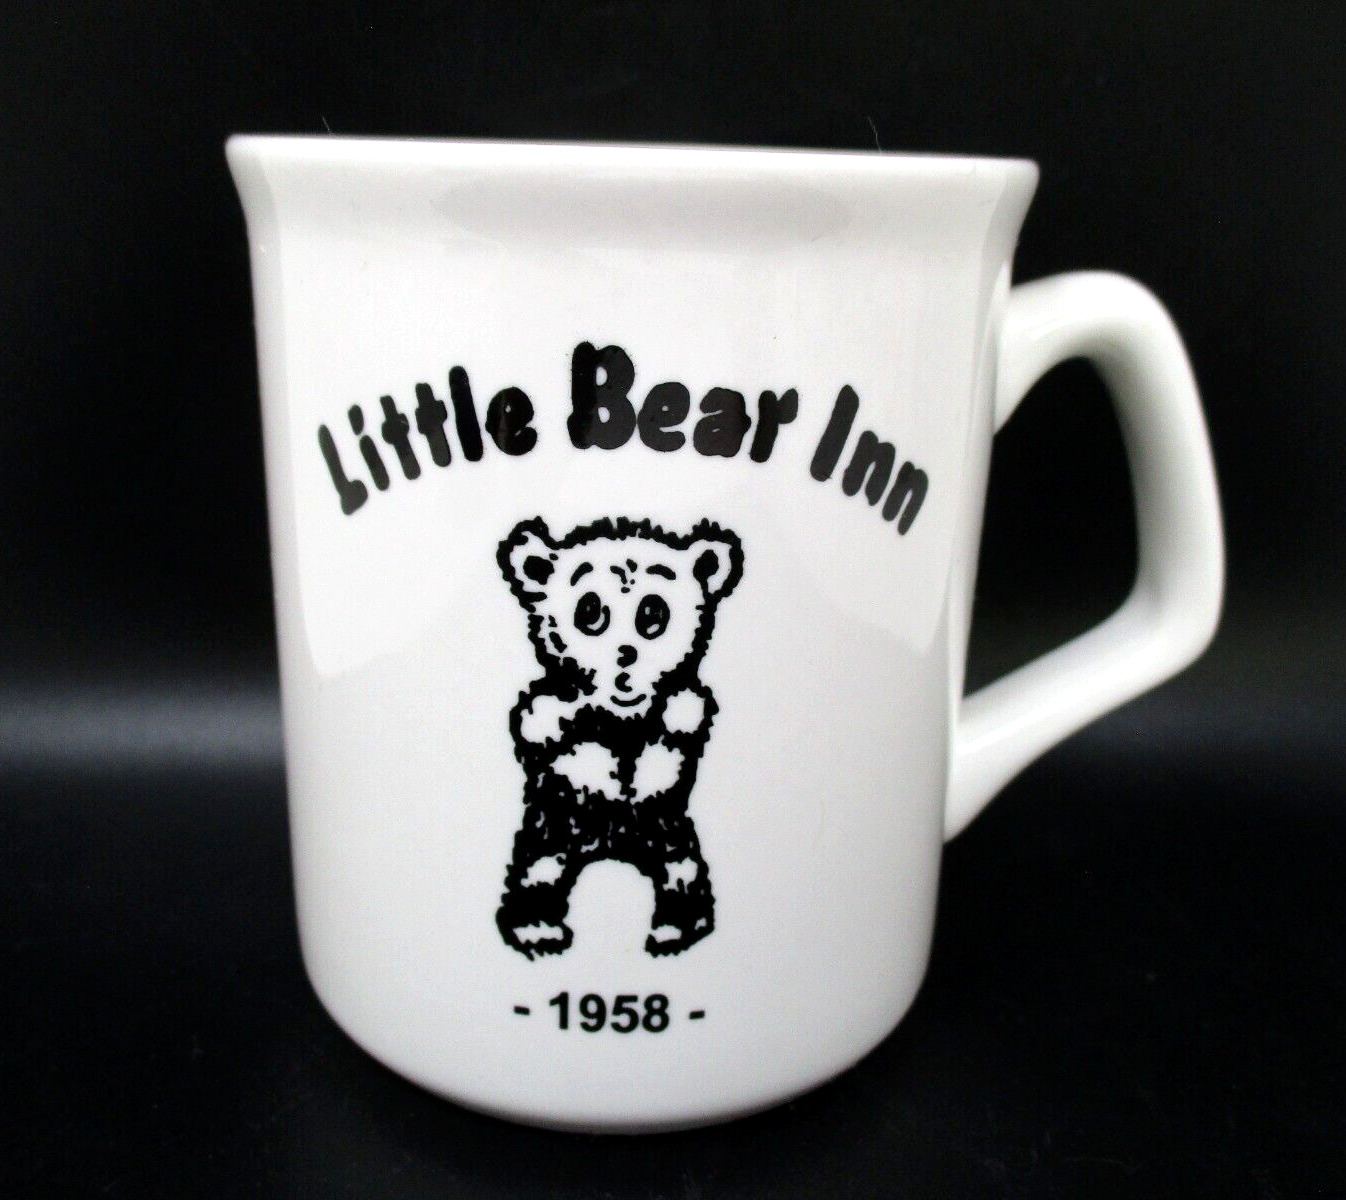 Vintage Little Bear Inn Mug 1958 Collectible Souvenir